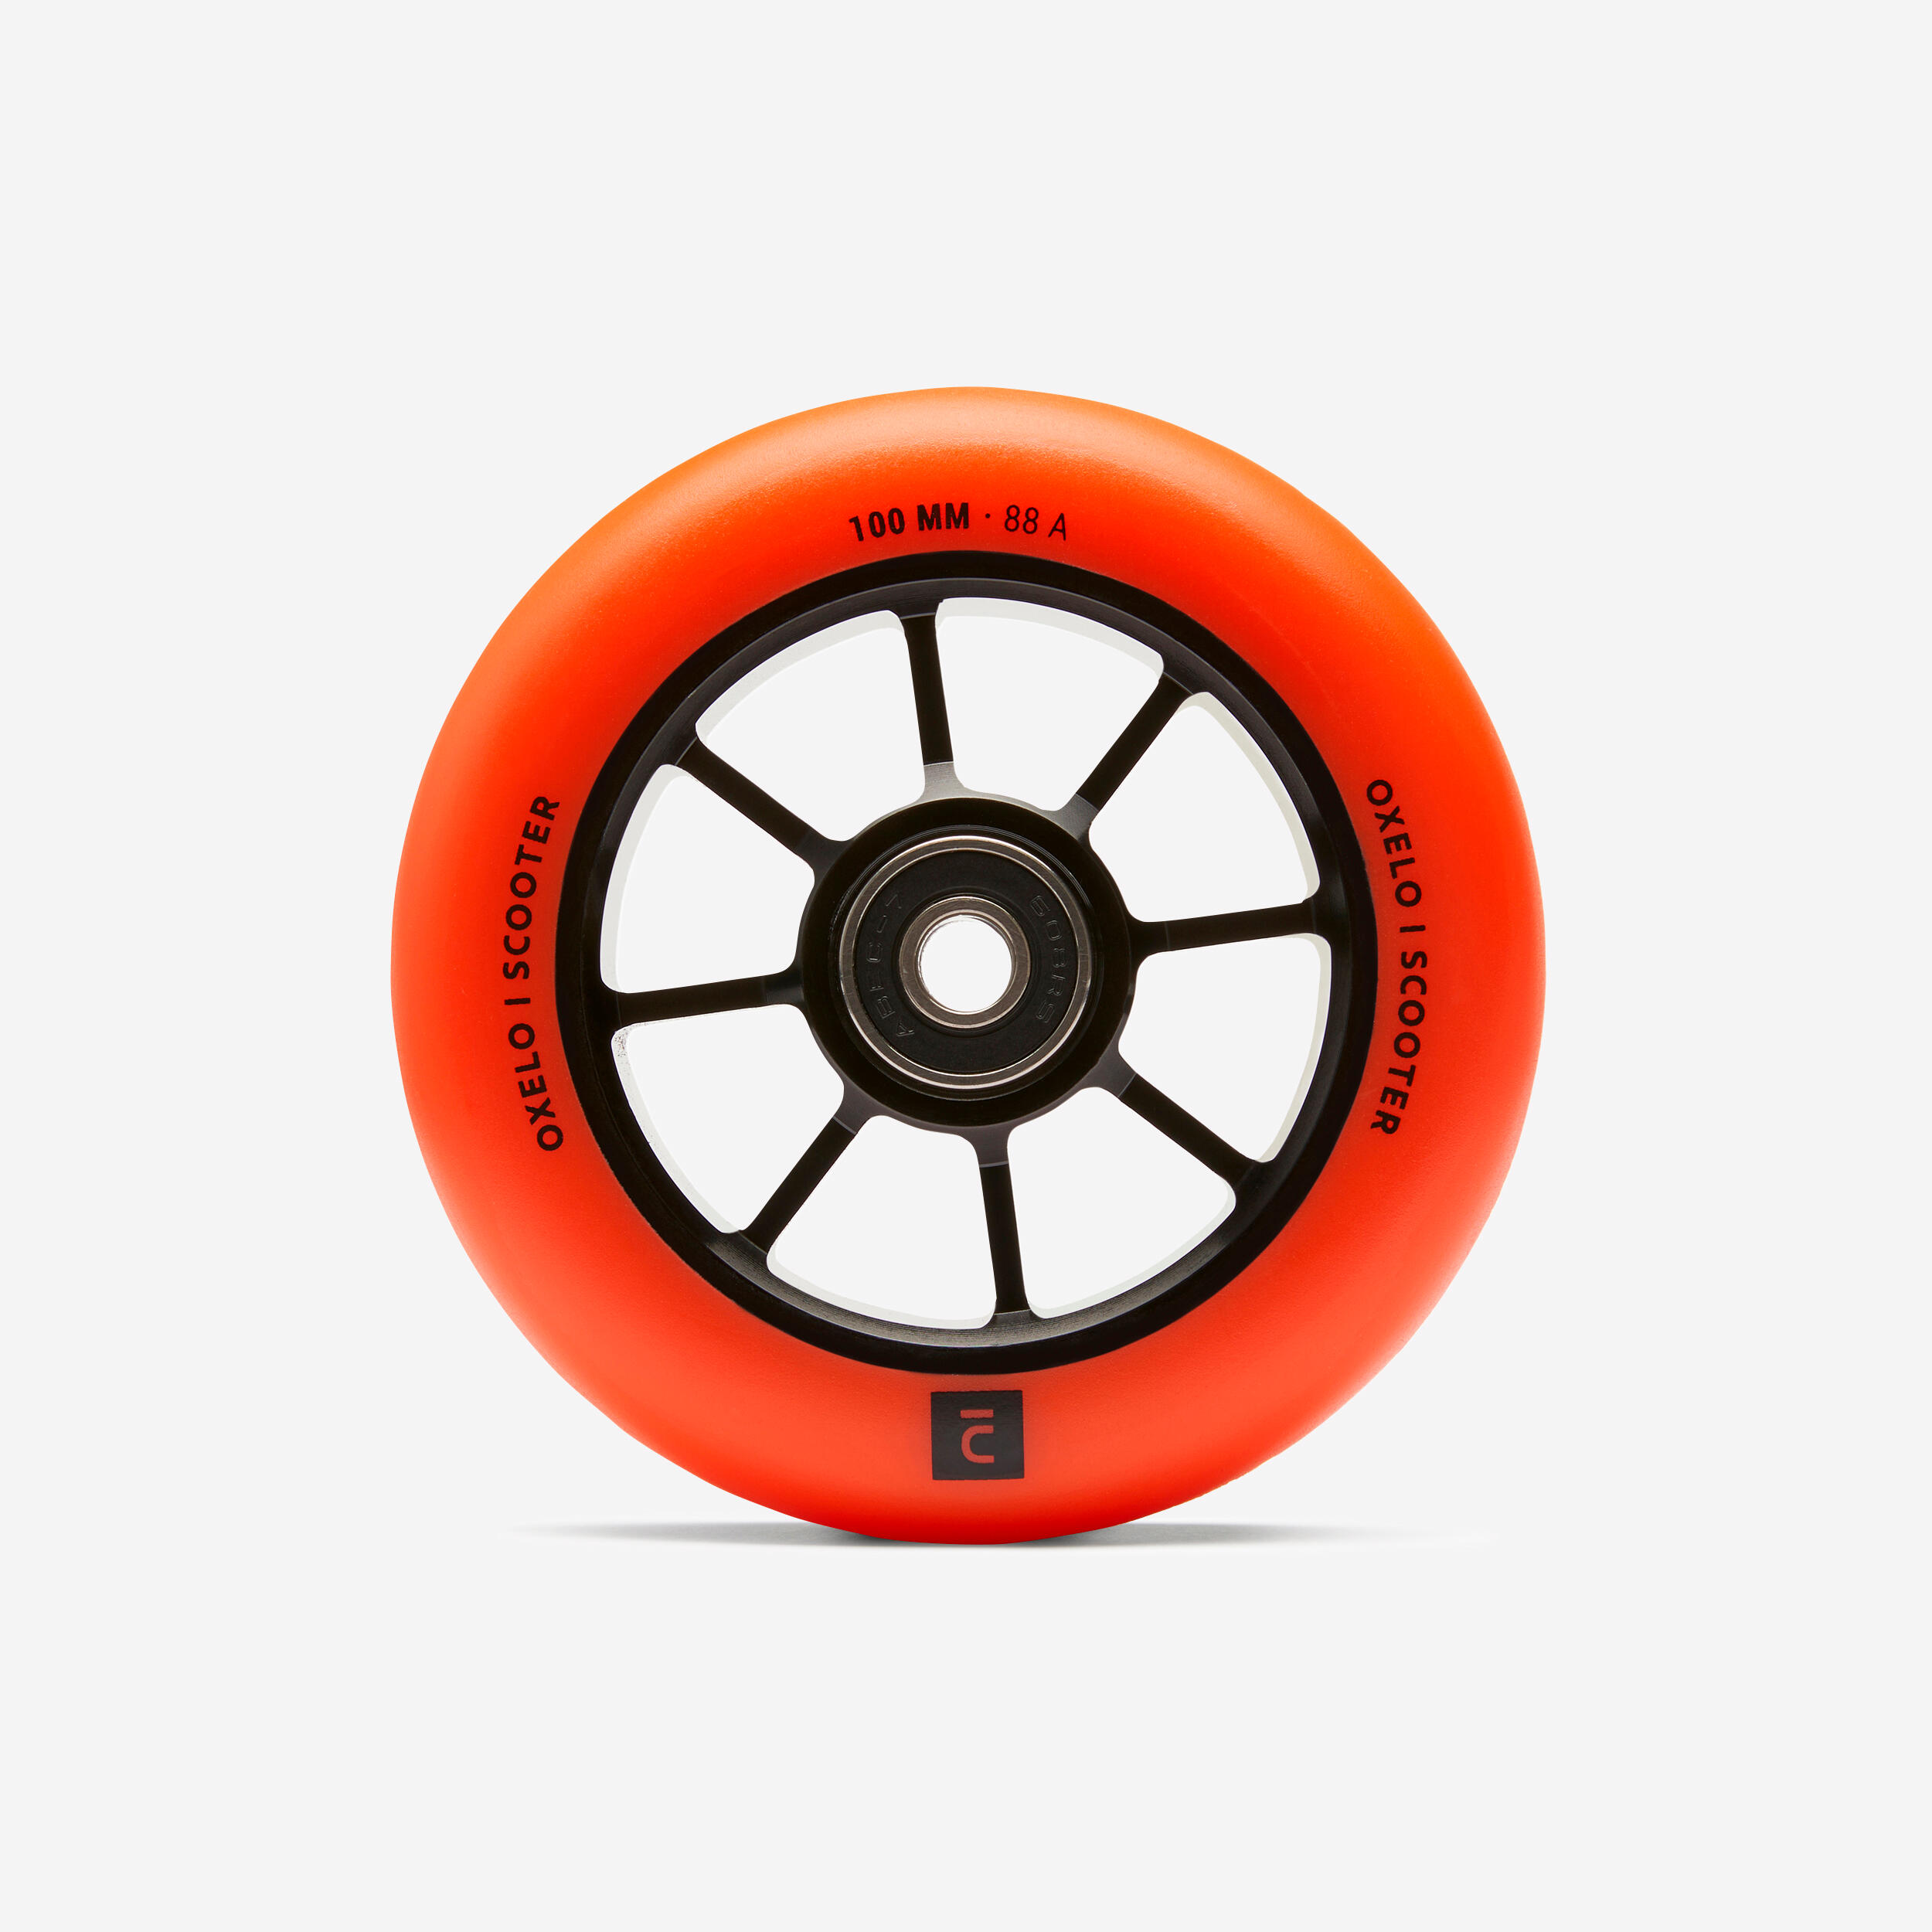 OXELO 100 mm Freestyle Wheel with Black Alu Rim & Fluo Orange PU85A Rubber